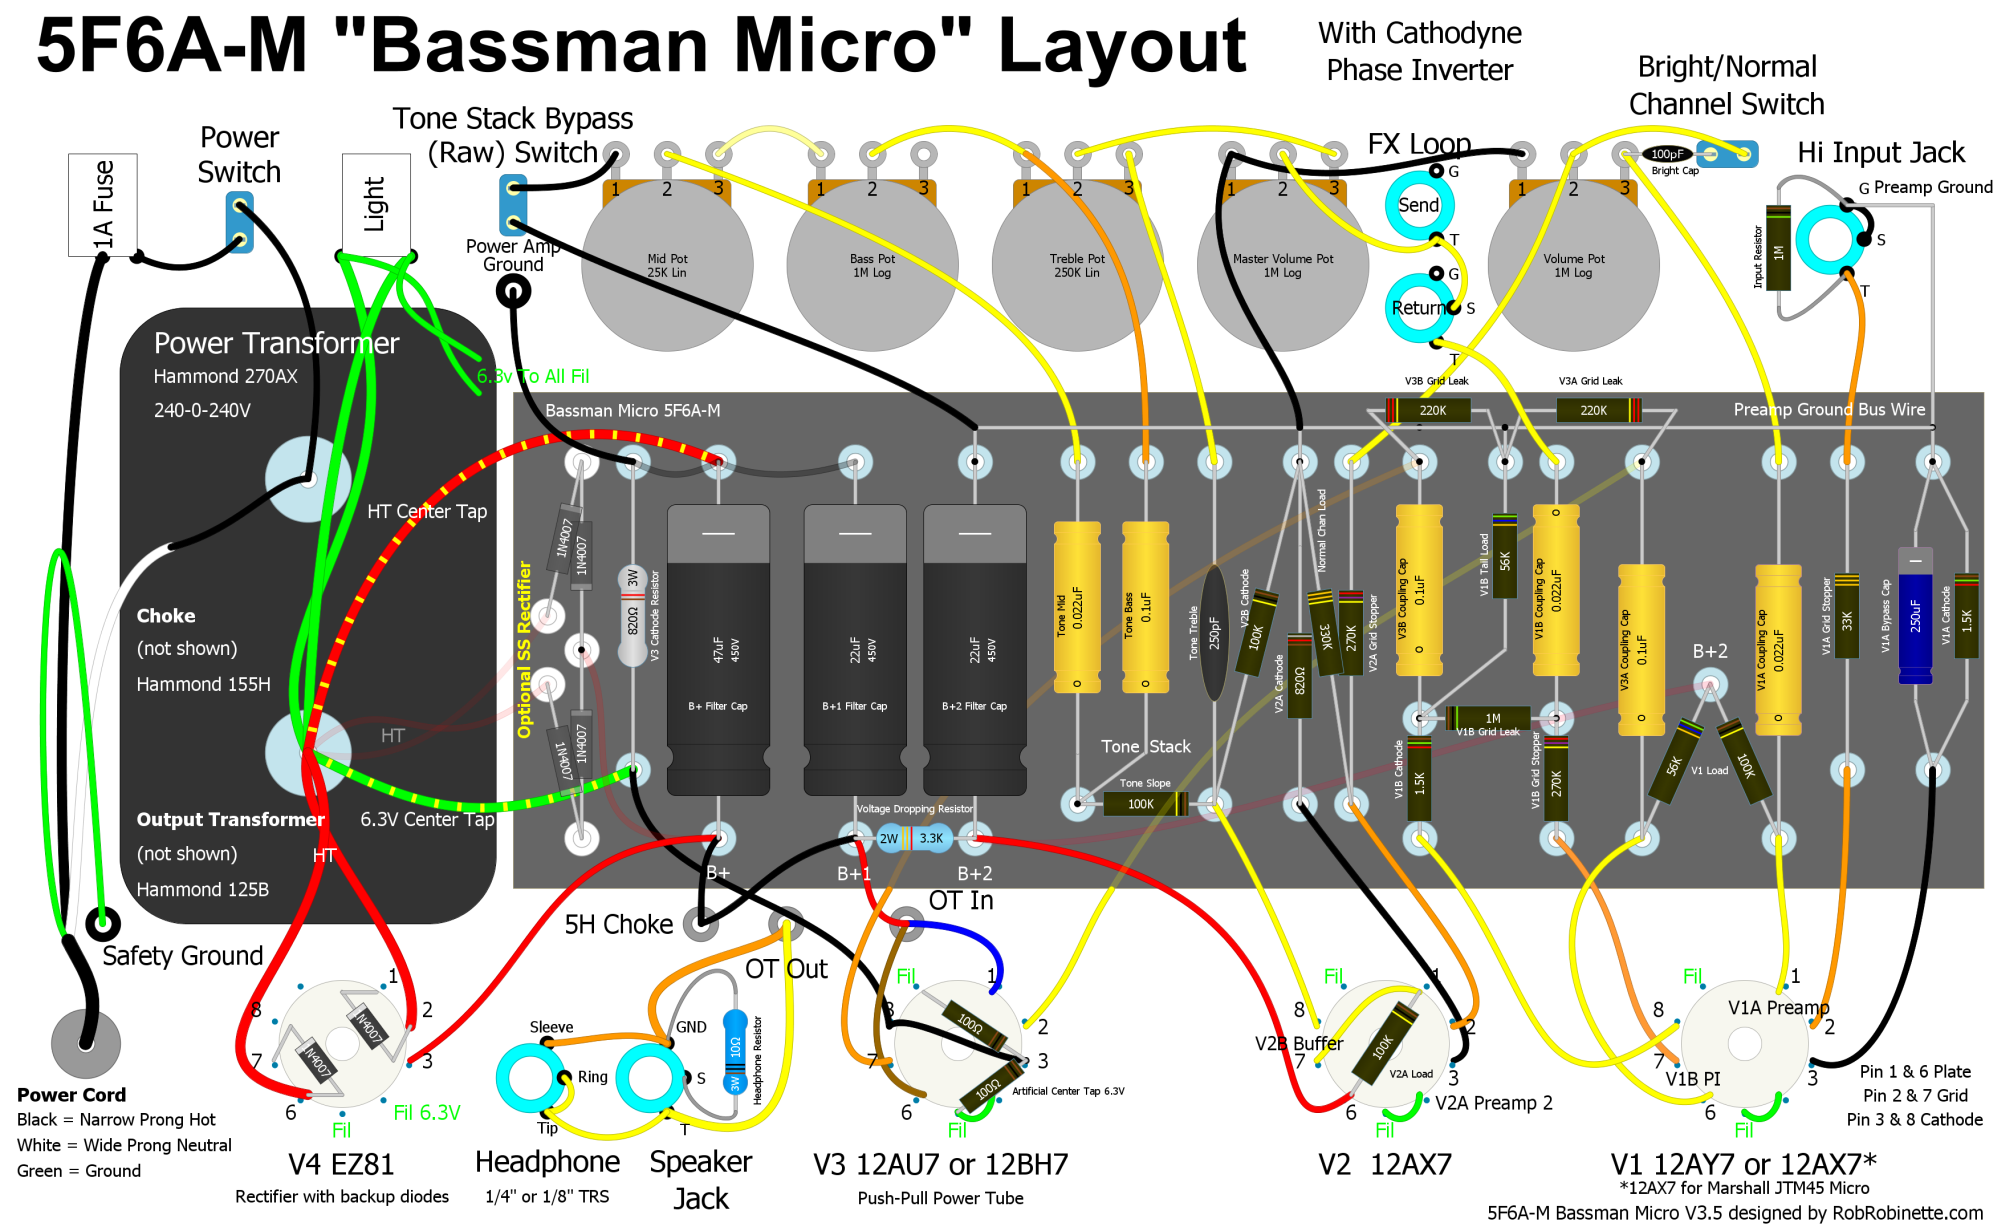 Bassman Micro Cathodyne Layout.